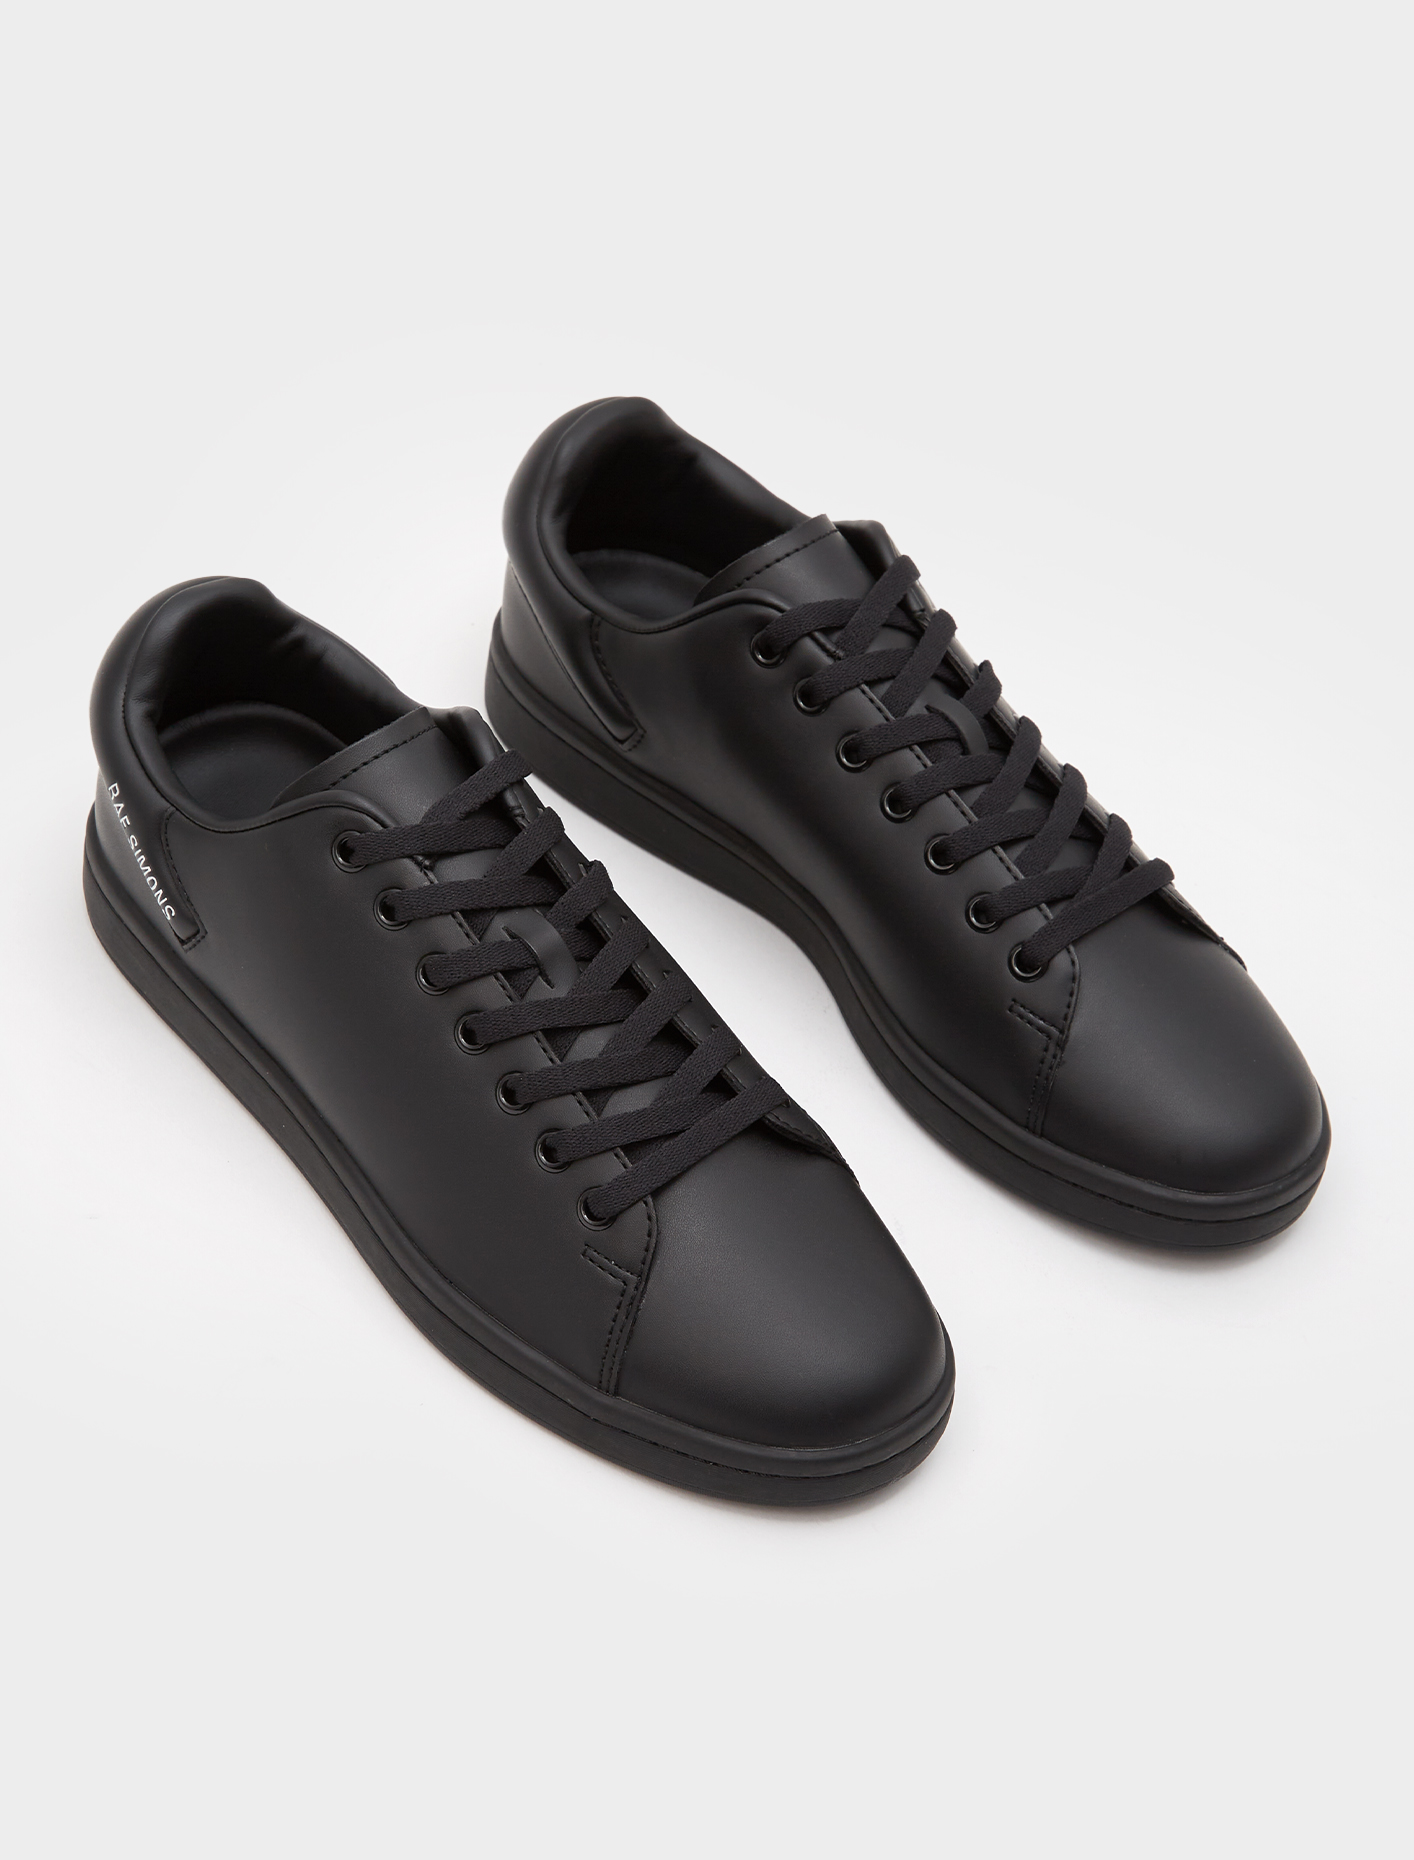 Raf Simons RS (Runner) Orion Sneaker in Black | Voo Store Berlin ...